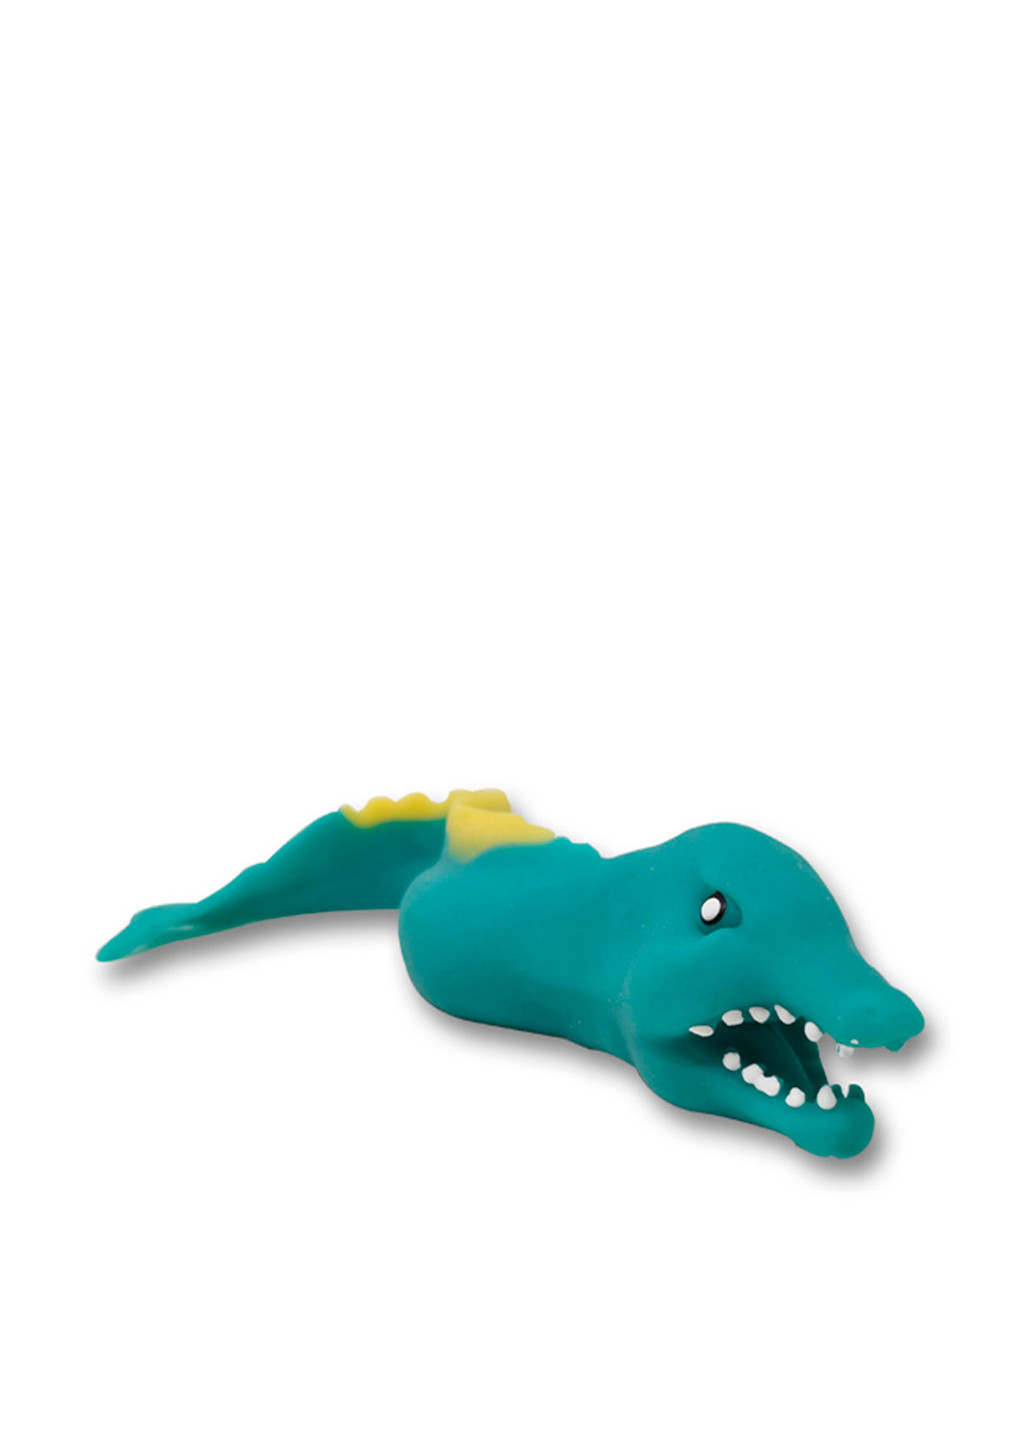 Стретч-игрушка Властелины морских глубин, 9х5х6 см #sbabam (253483846)